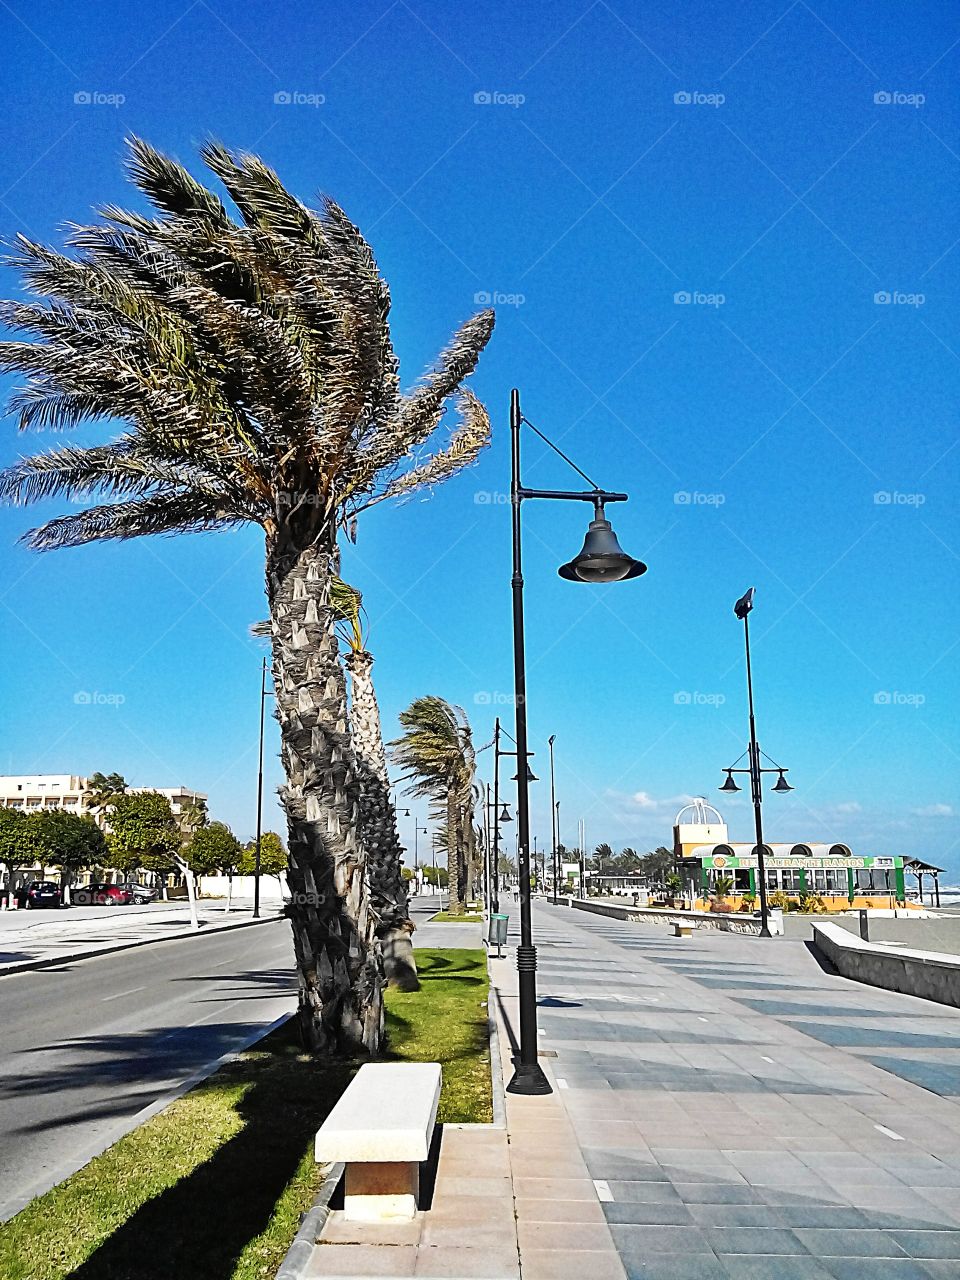 Wind. That was warm but very windy day in Torremolinos,  Costa del Sol 